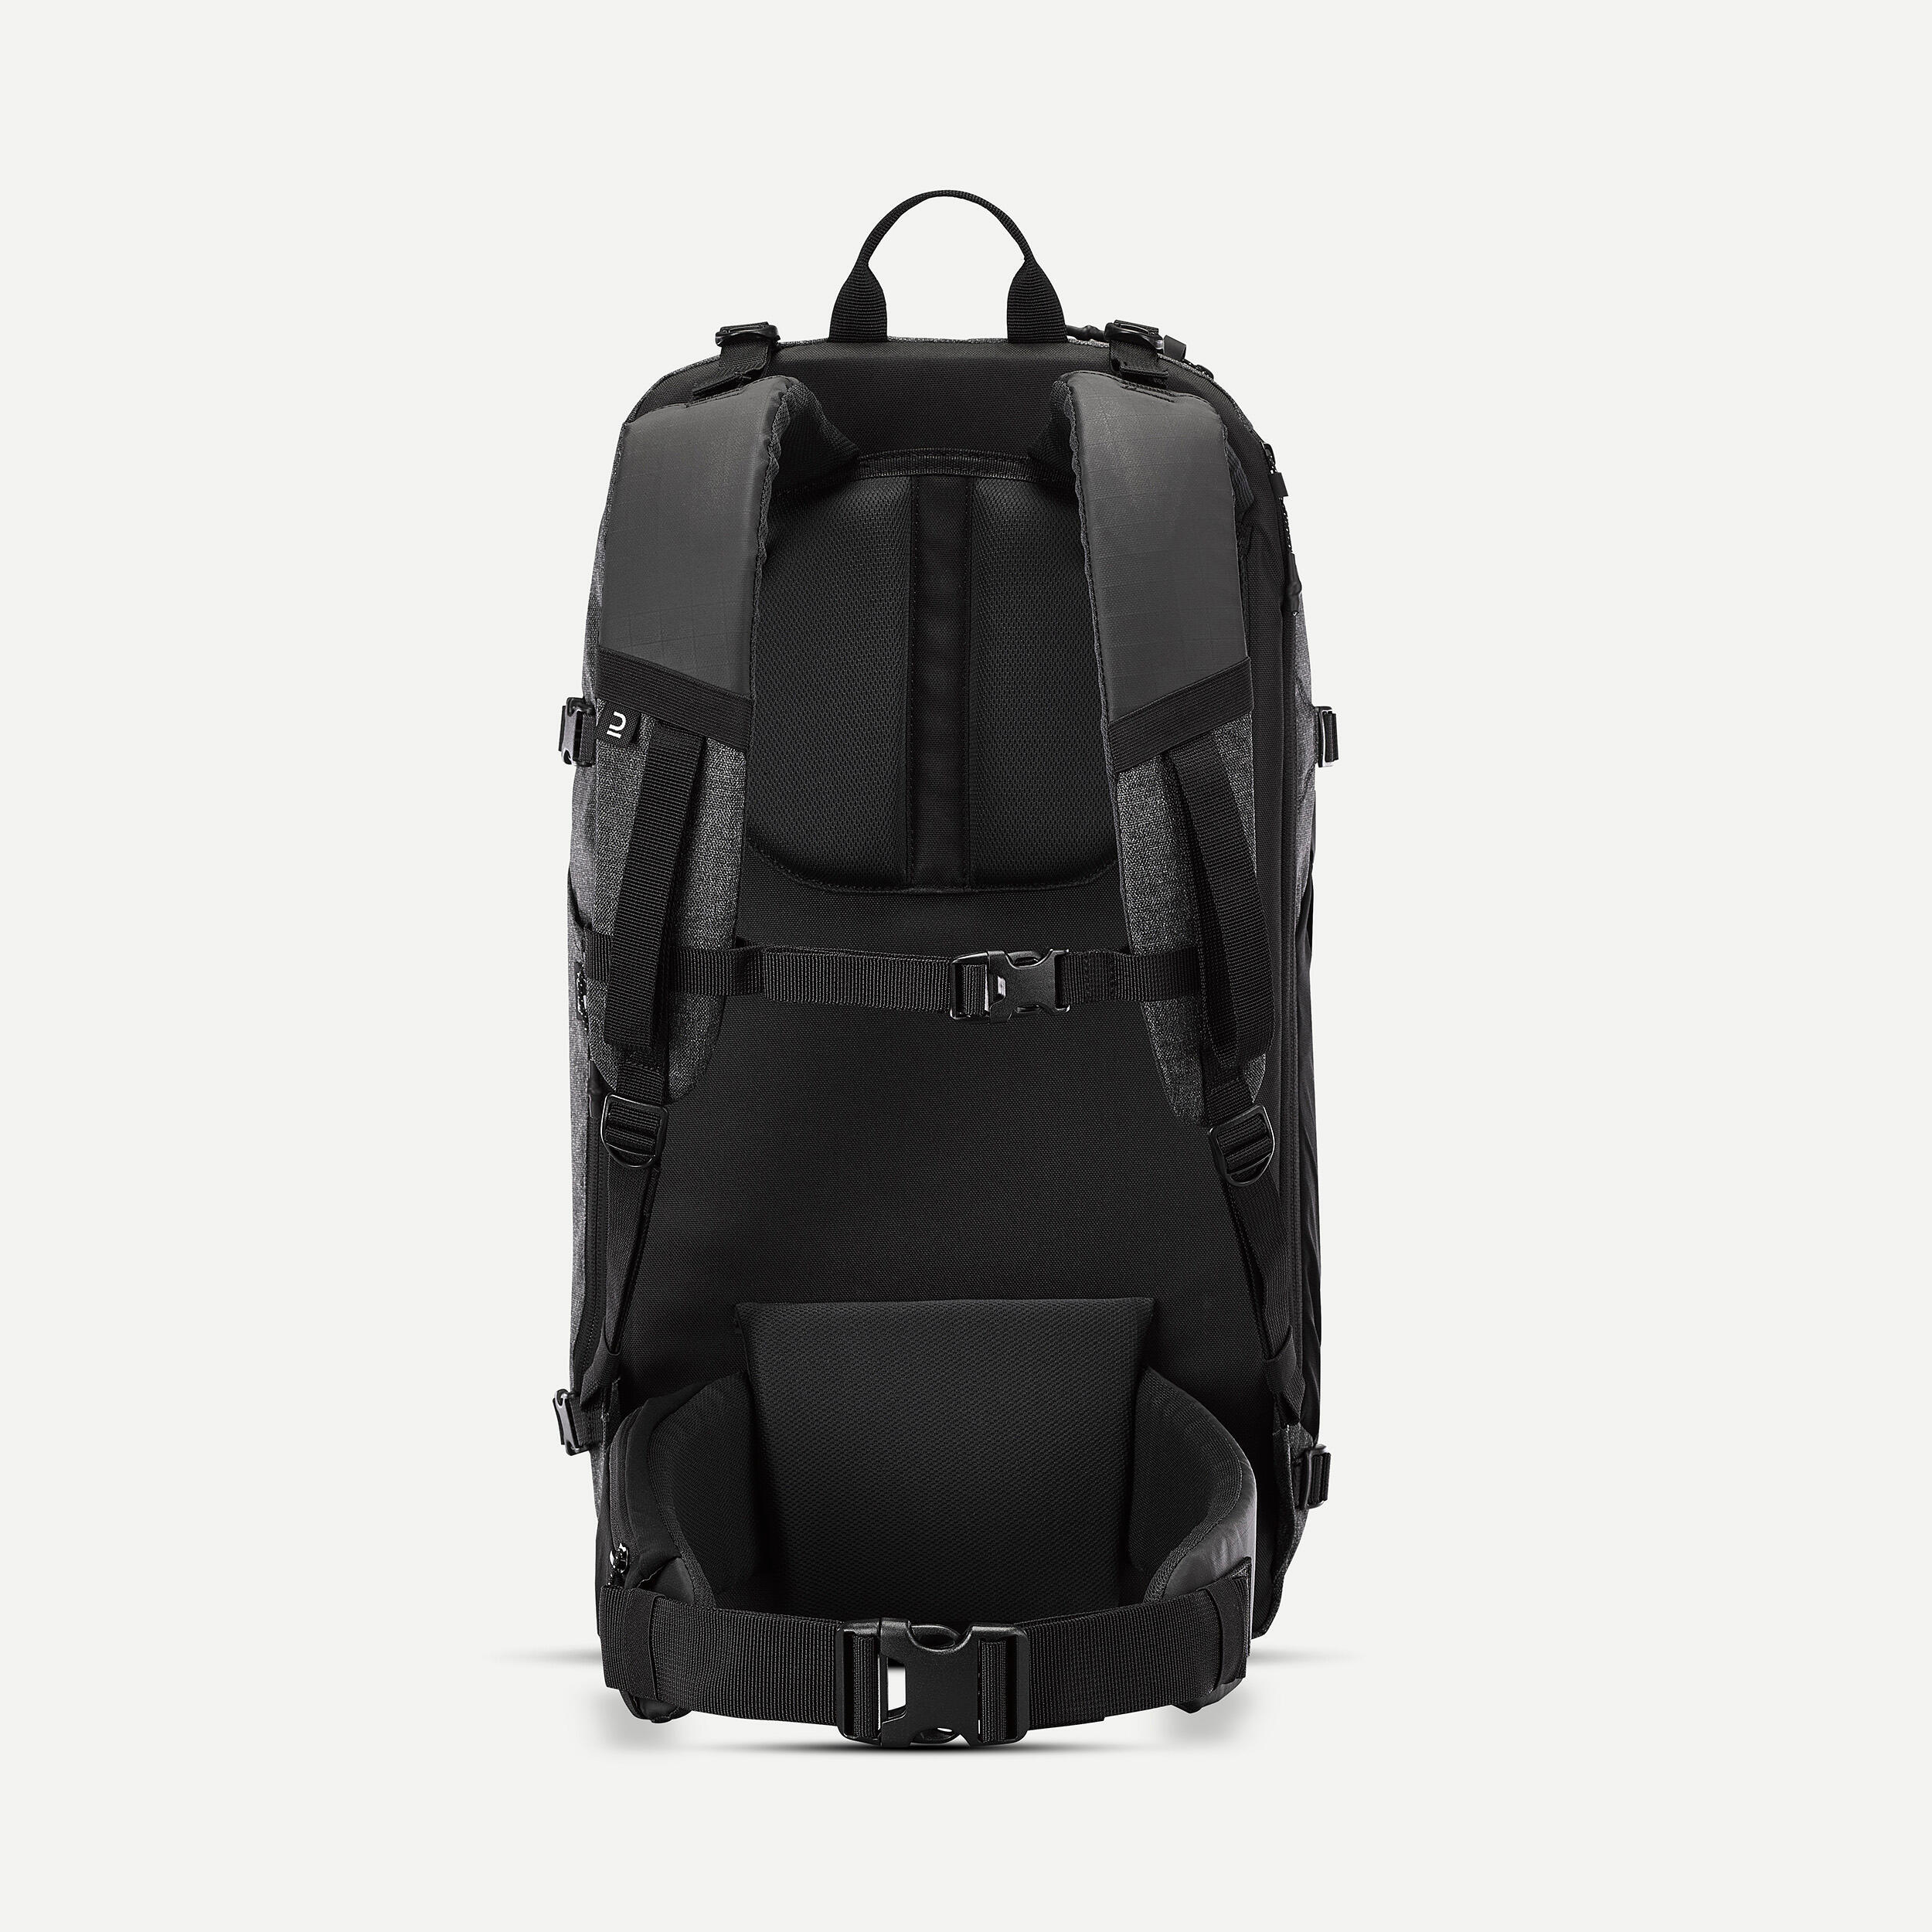 Travel Backpack 40 L - Travel 500 ORGANIZER Black 5/10